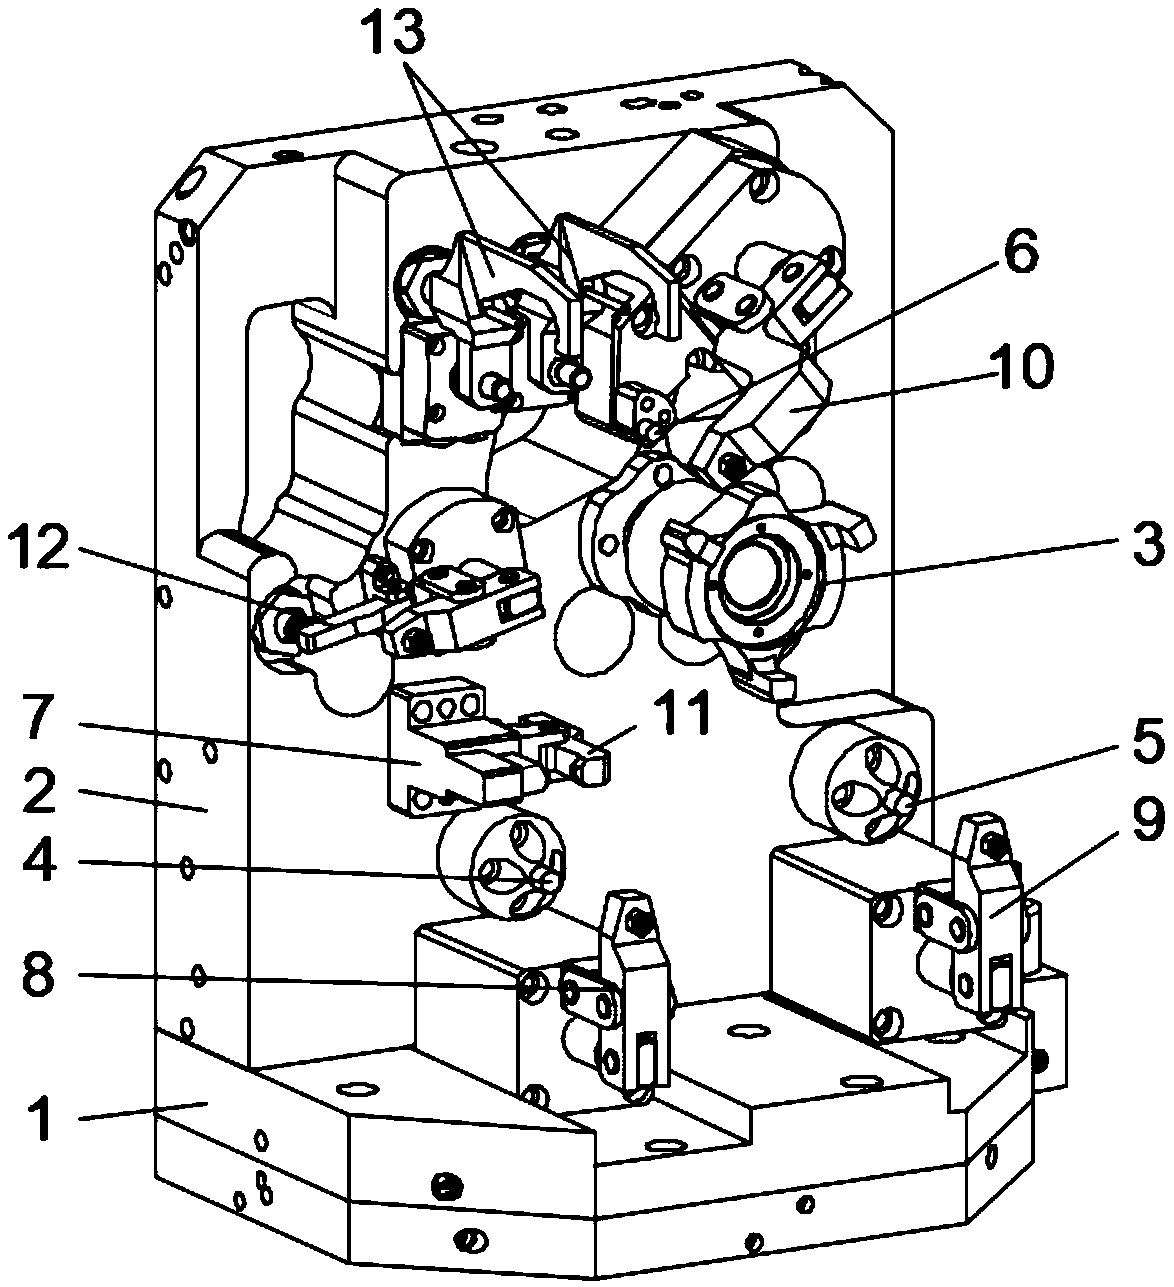 Hydraulic fixture for hub bracket five-axis machine tool machining